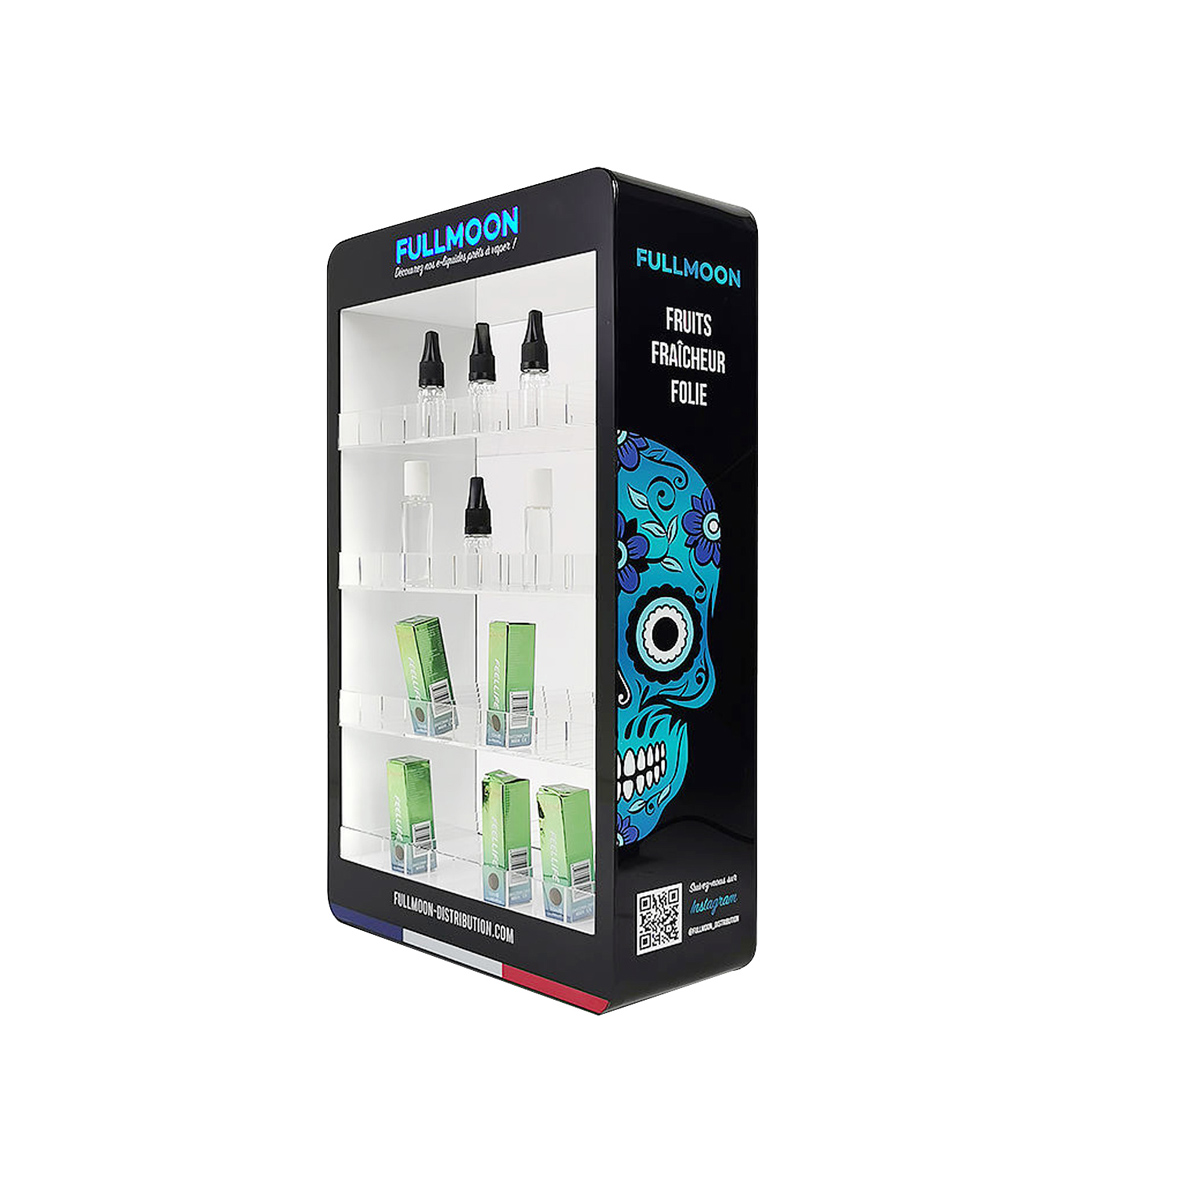 Countertop e-cigarette /CBD oil display stand with lights